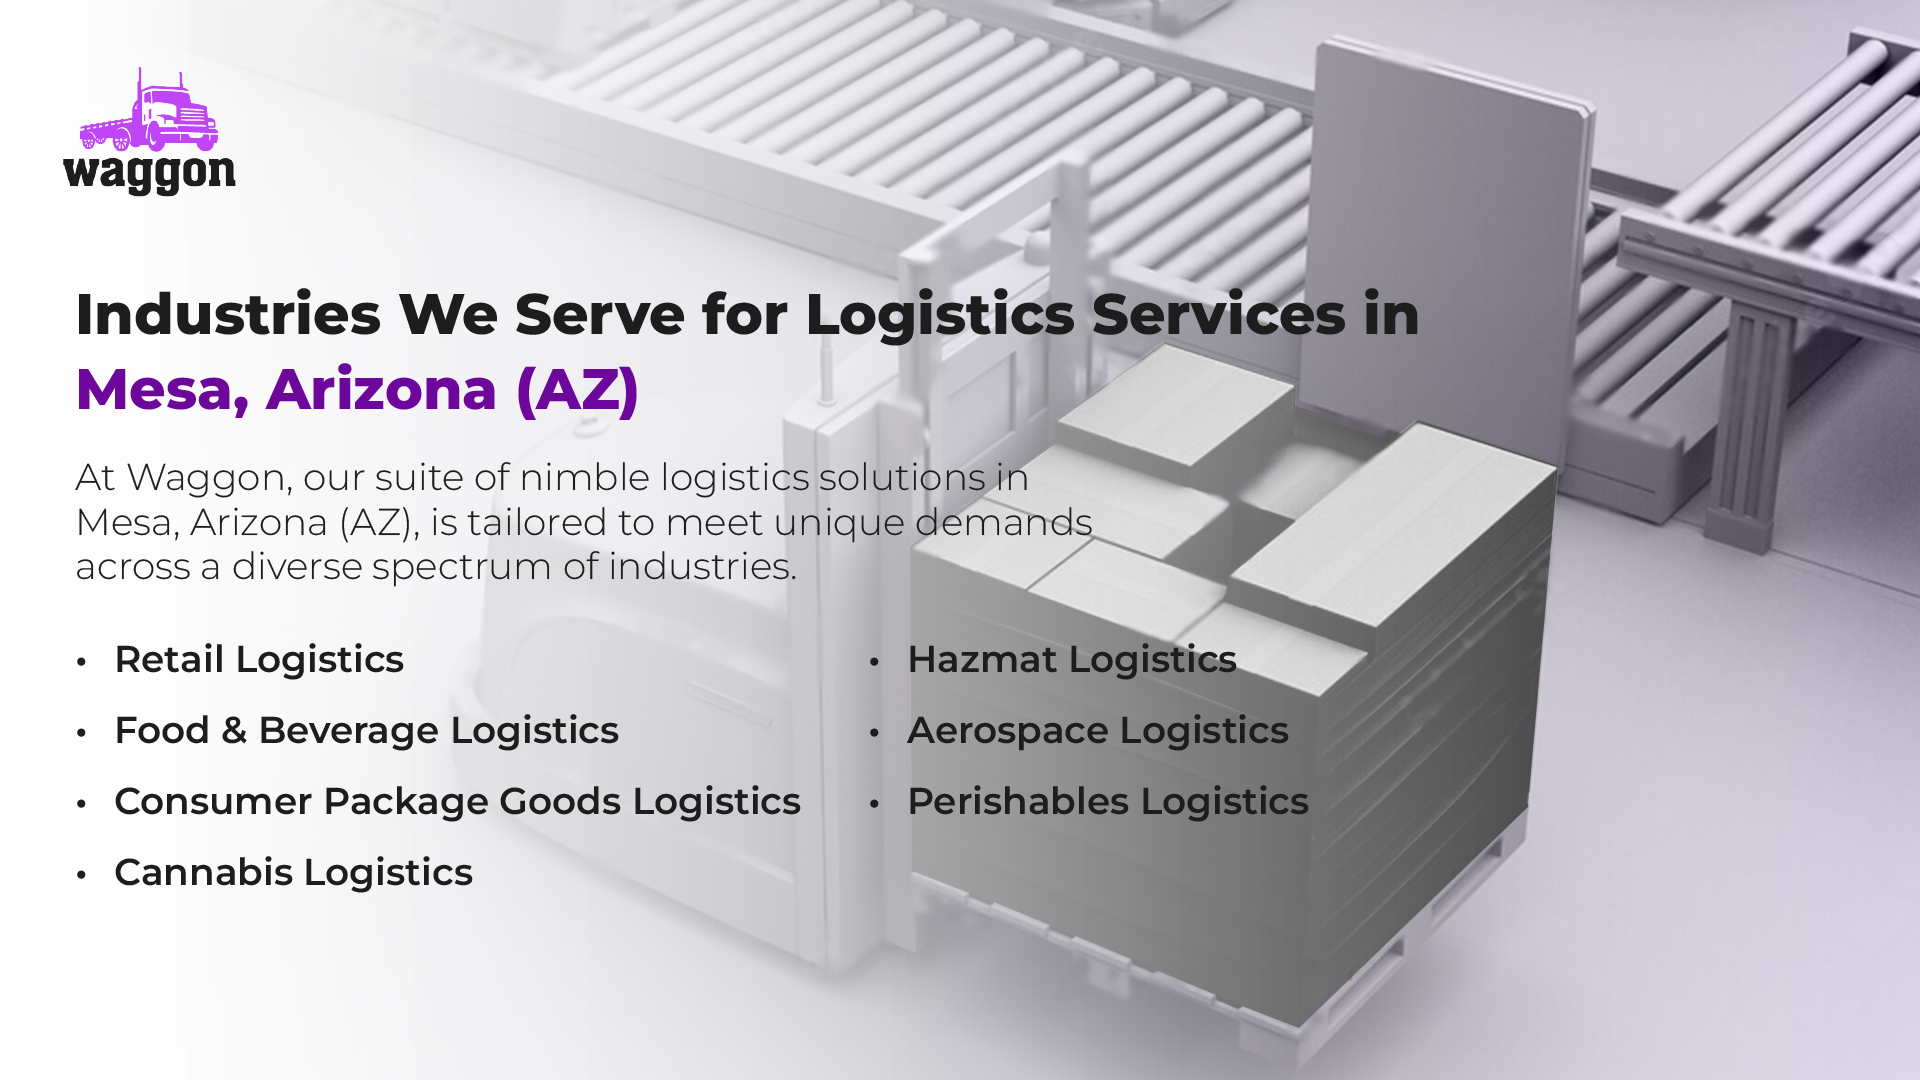 Industries We Serve for Logistics Services in Mesa, Arizona (AZ)